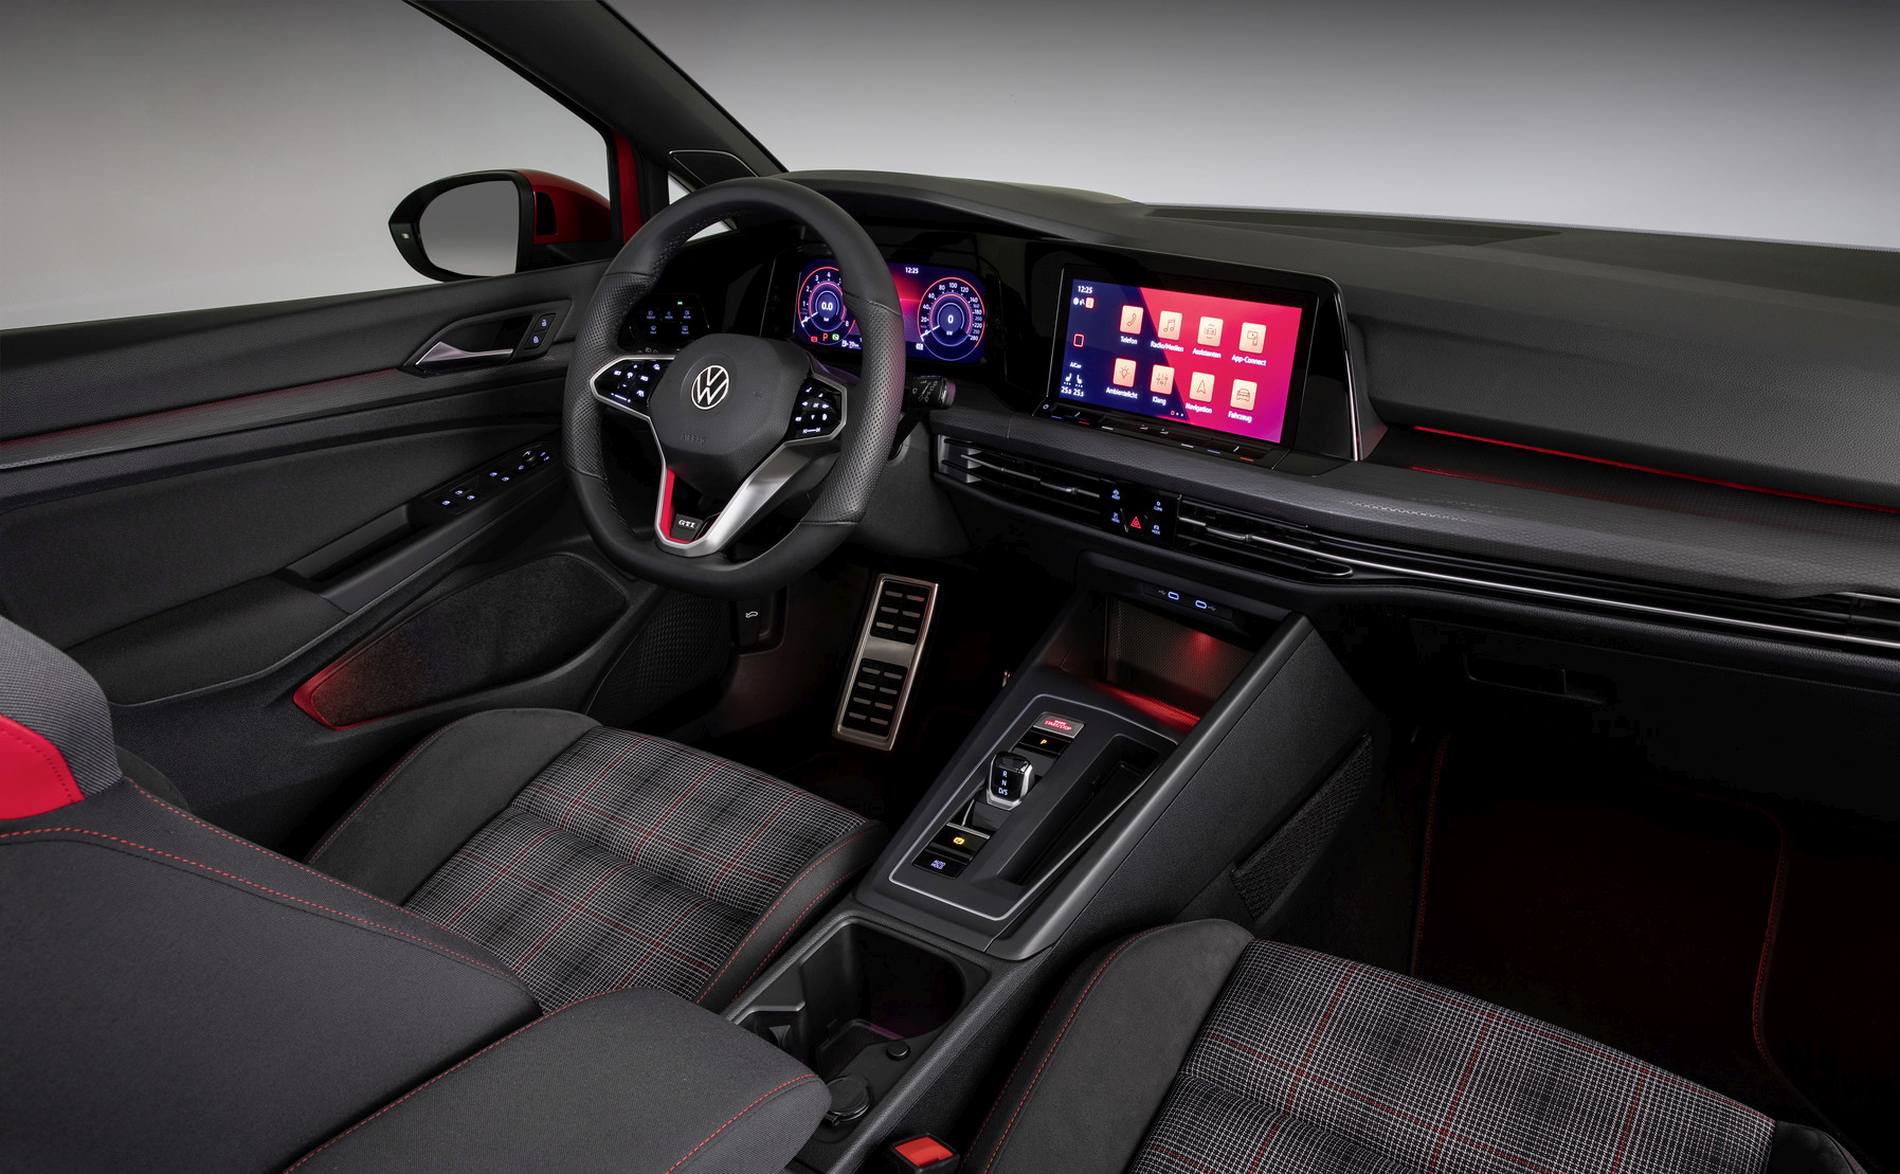 The new Volkswagen Golf GTI